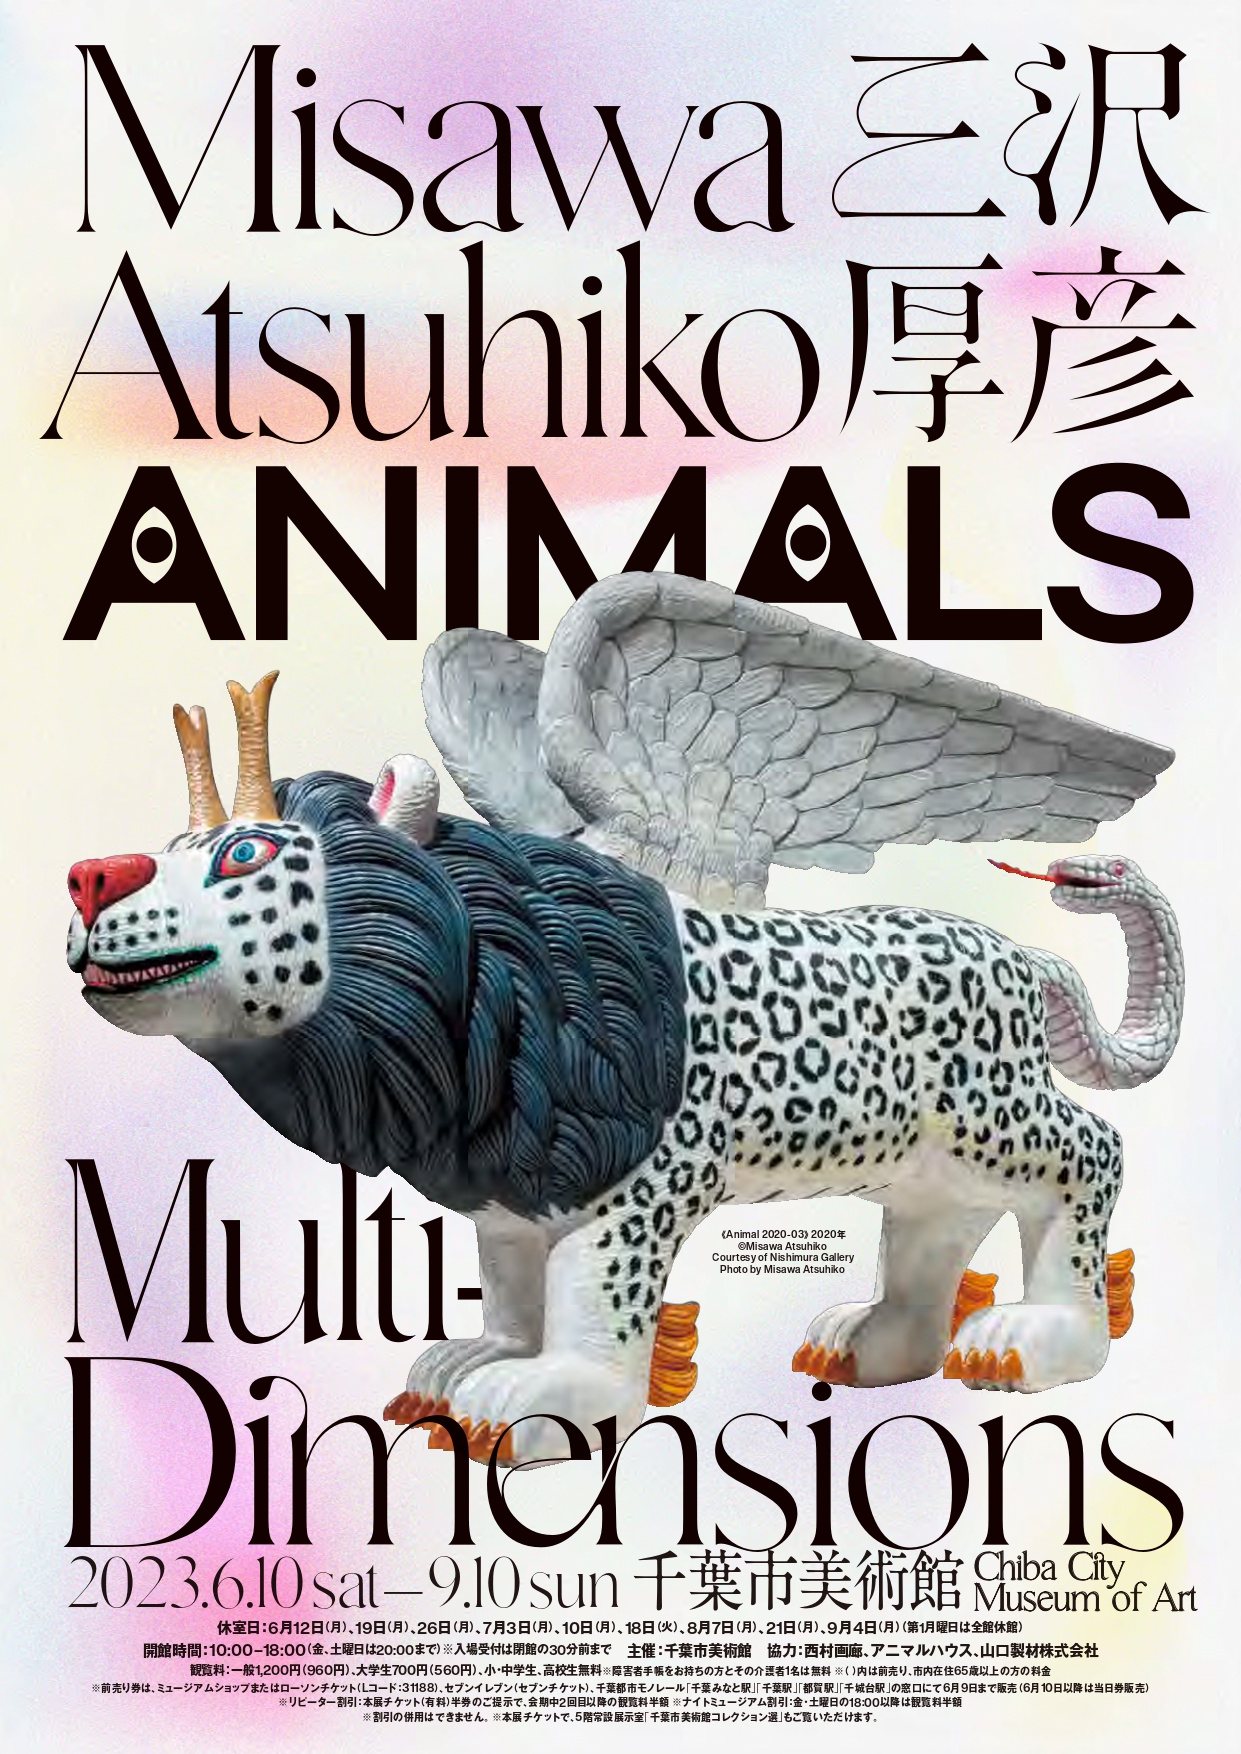 「三沢厚彦 ANIMALS / Multi-dimensions」 （千葉市美術館 